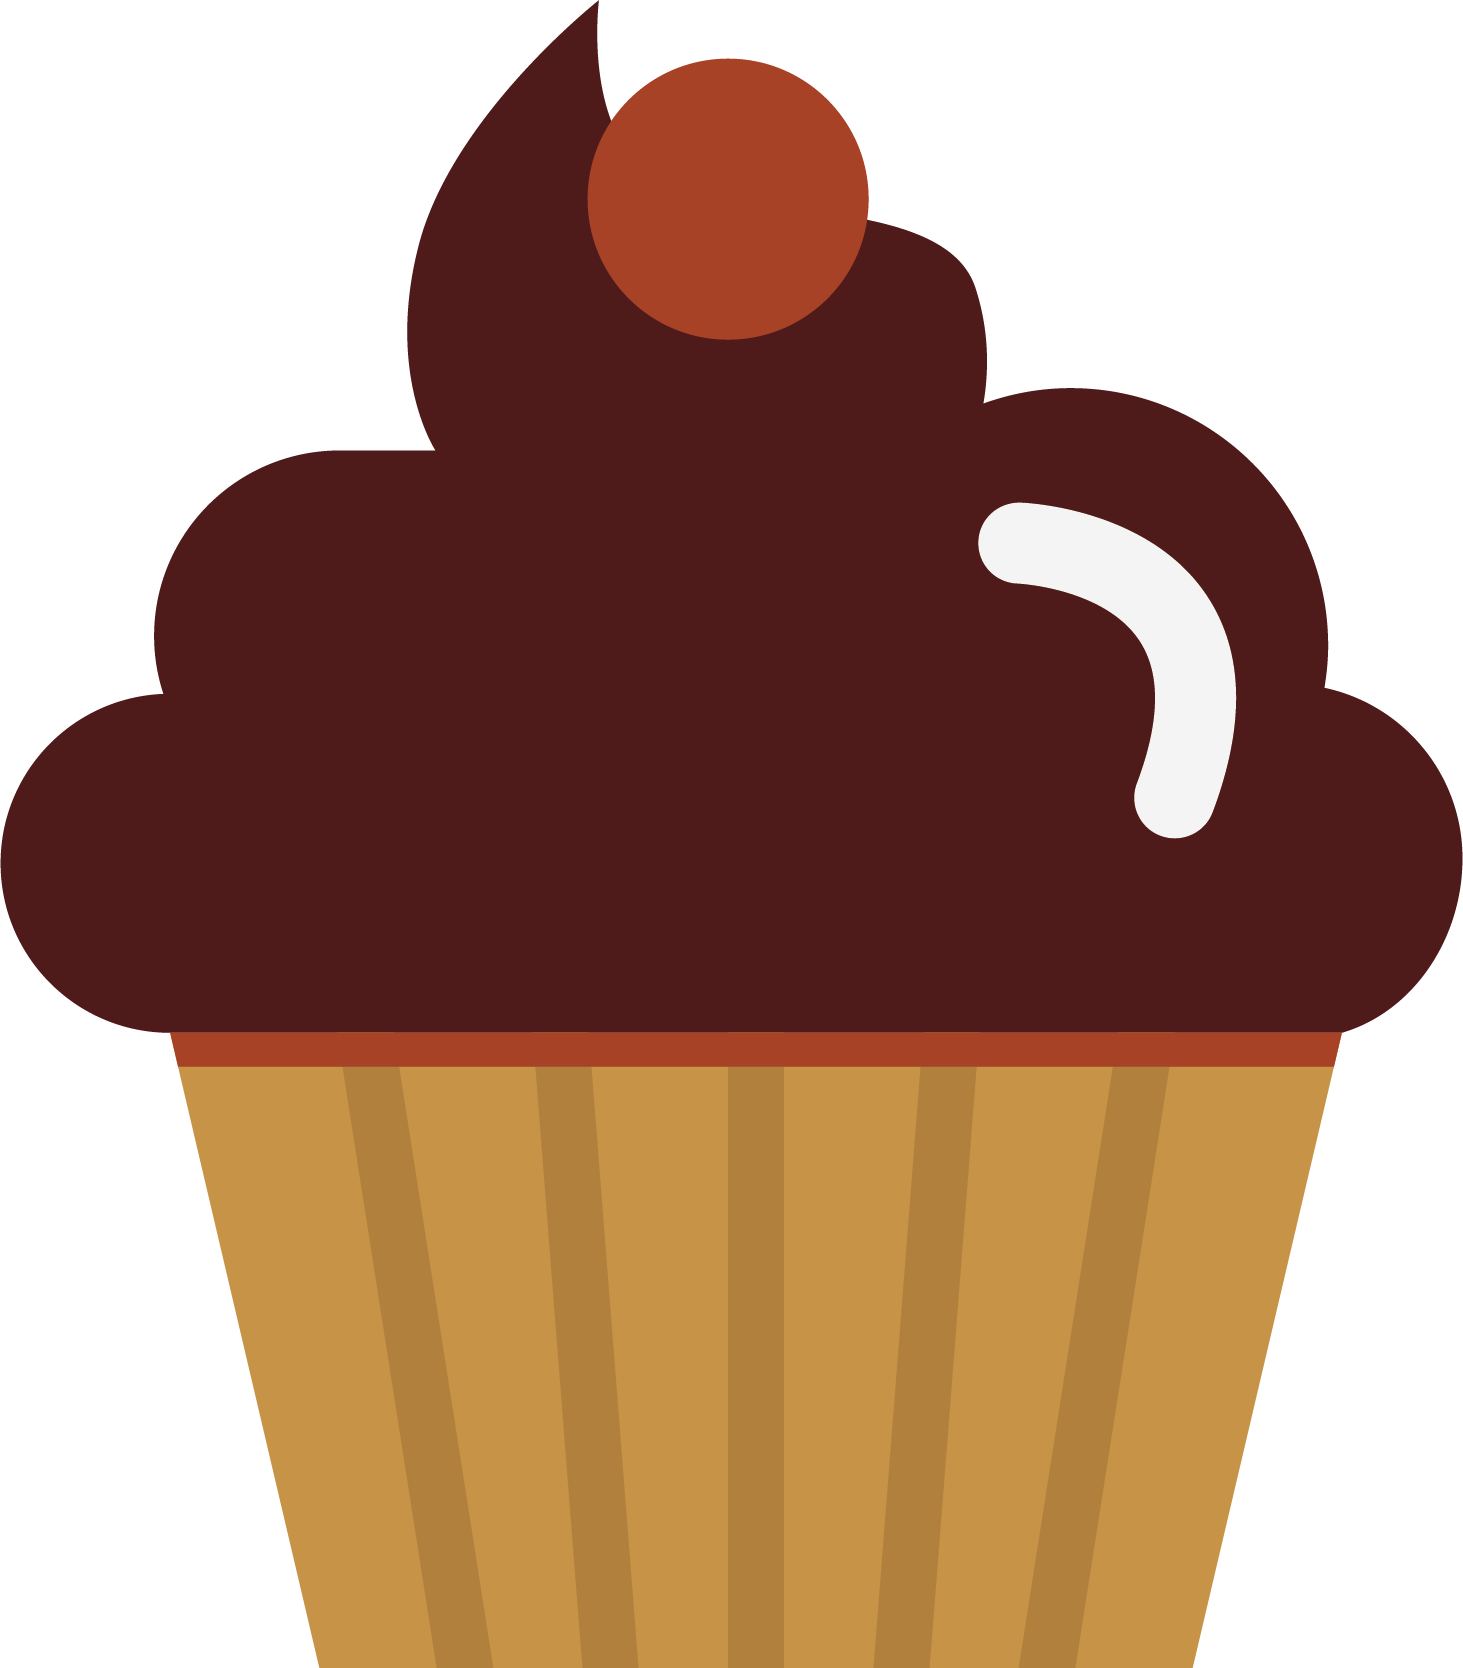 Ice Cream Cone Chocolate Cake Matcha - Ice Cream Cone Chocolate Cake Matcha (1463x1668)